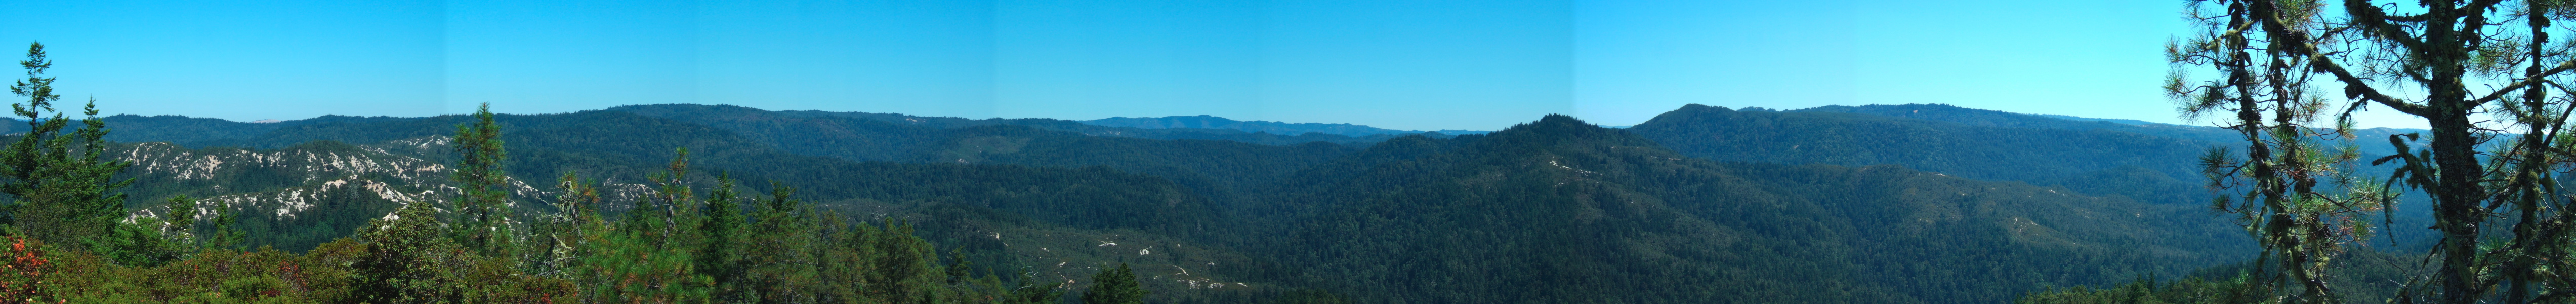 Chalk Mountain (1609ft) Panorama